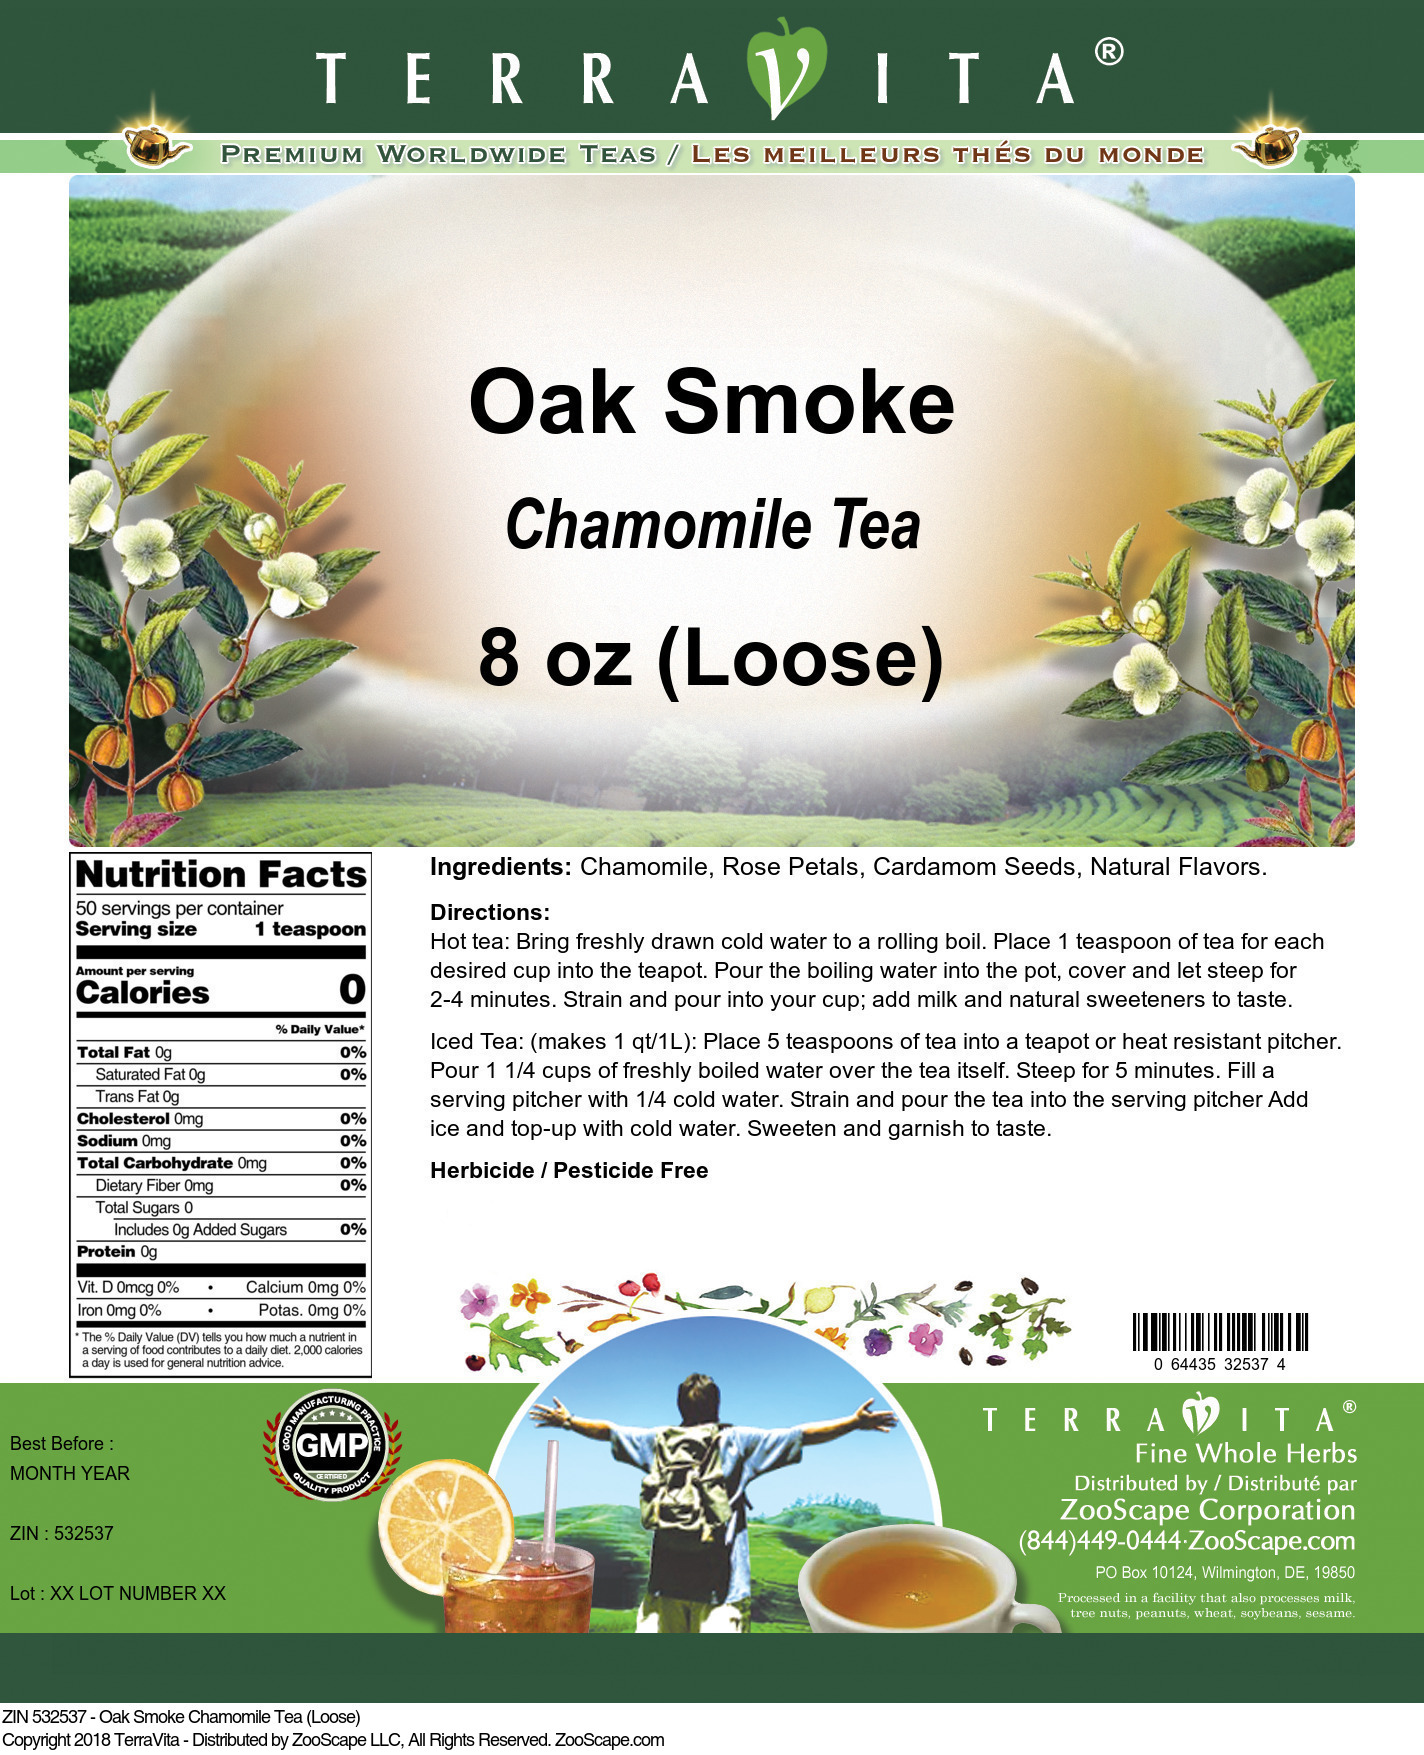 Oak Smoke Chamomile Tea (Loose) - Label